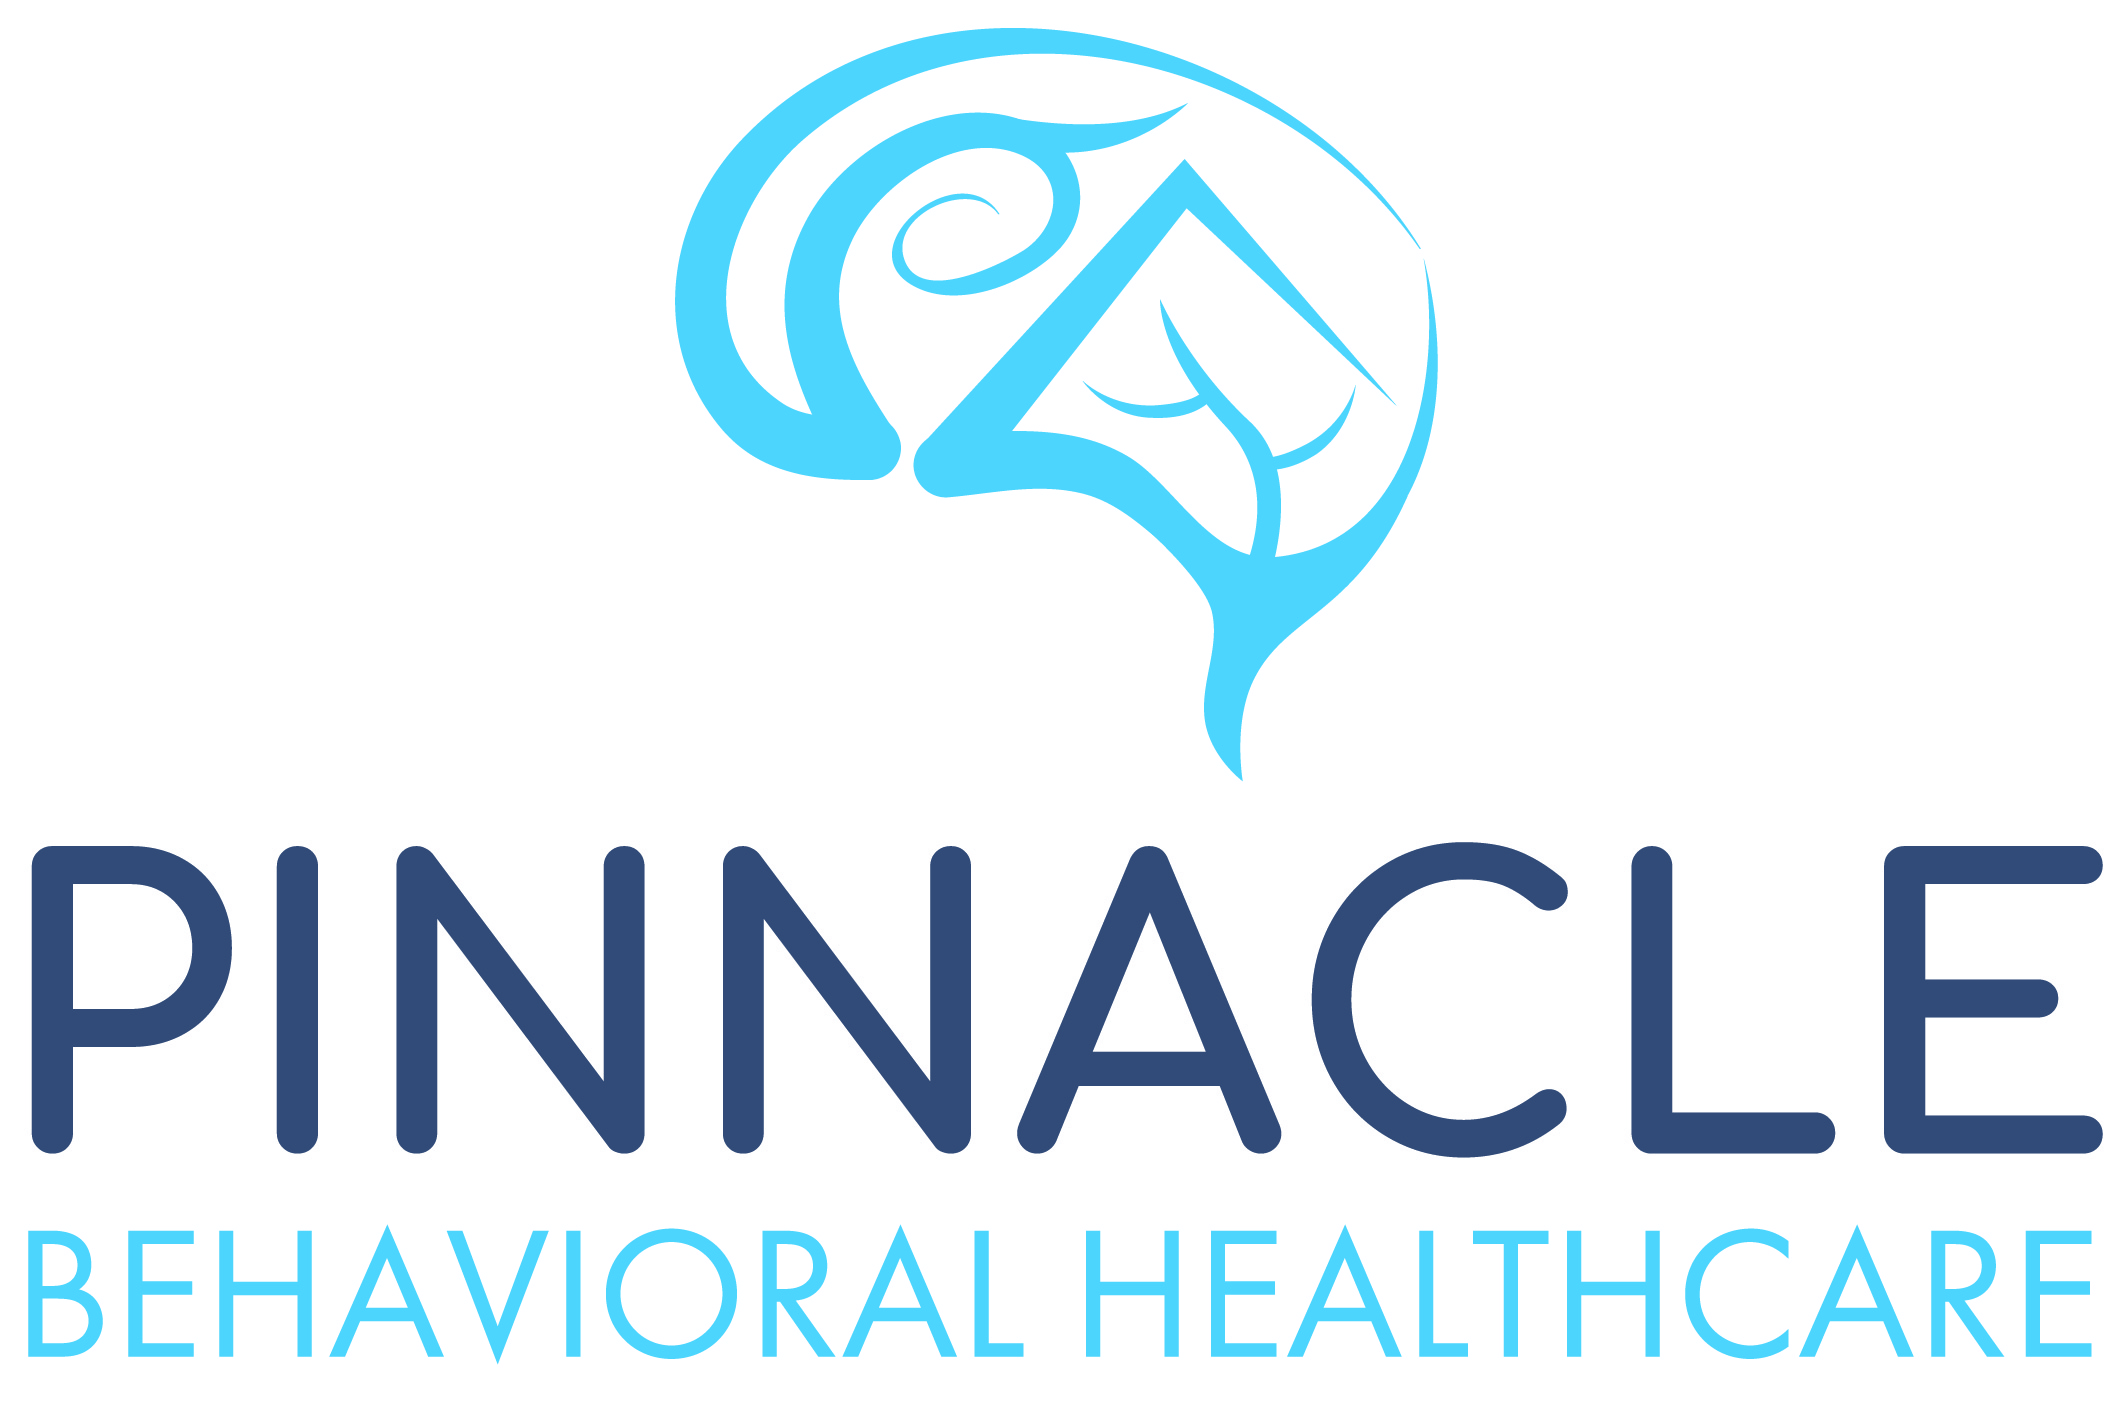 Pinnacle Behavioral Healthcare logo